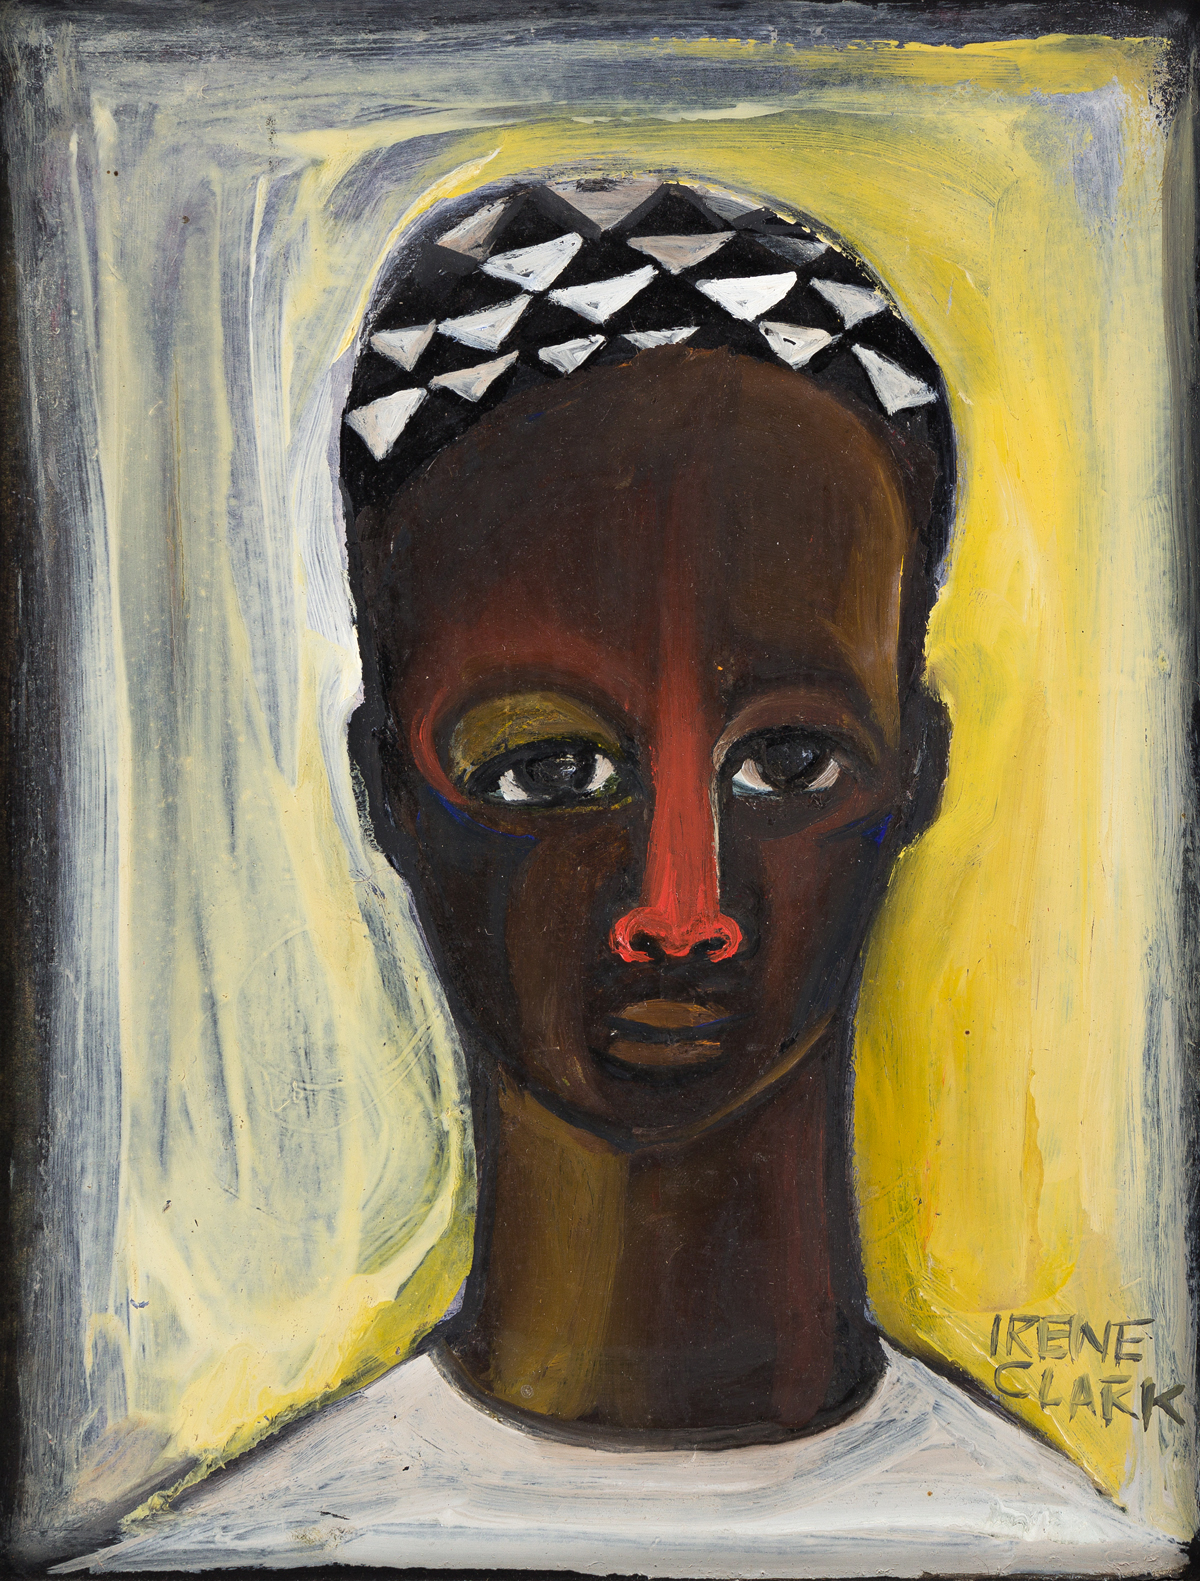 IRENE V. CLARK (1927 - 1984) Untitled (Head of an African Man).